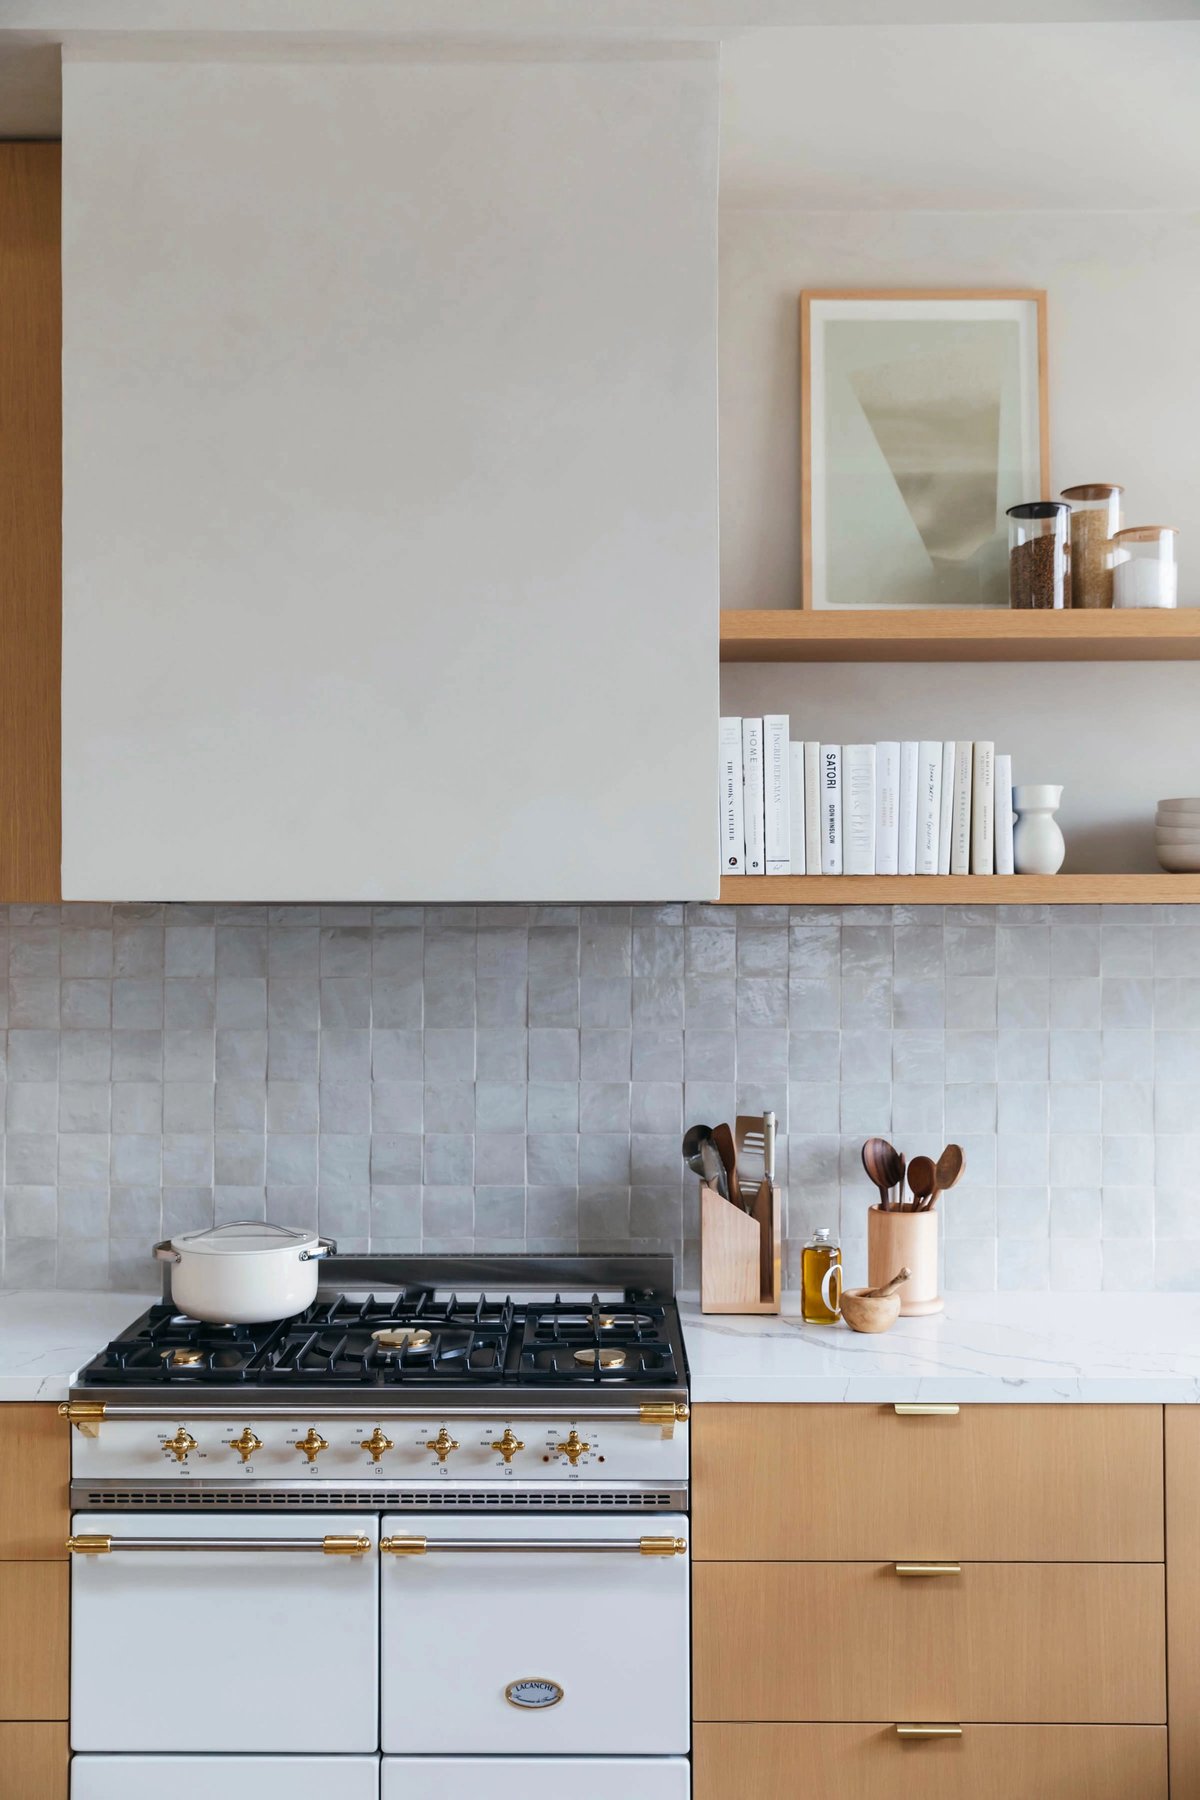 Handmade tile, plaster lime washed walls & custom cabinets